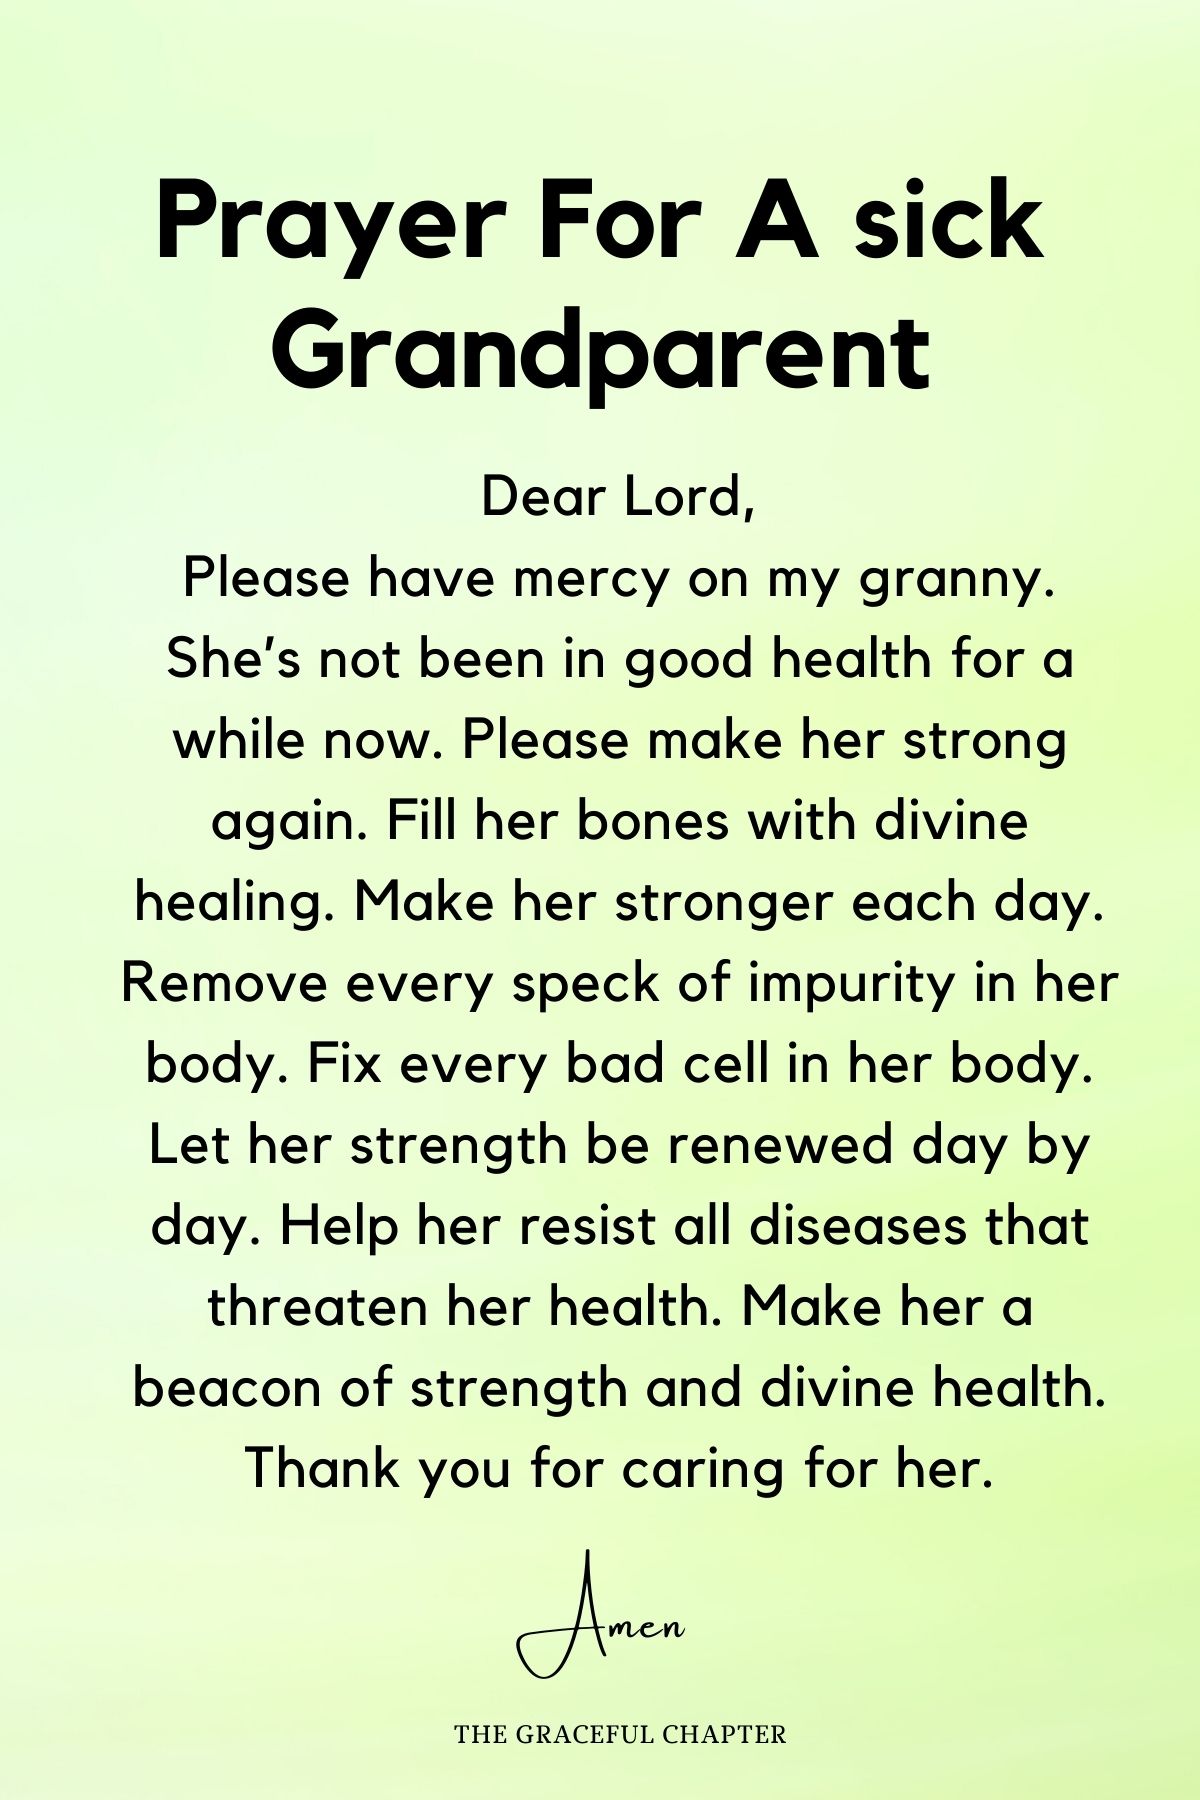 Prayer for a sick grandparent